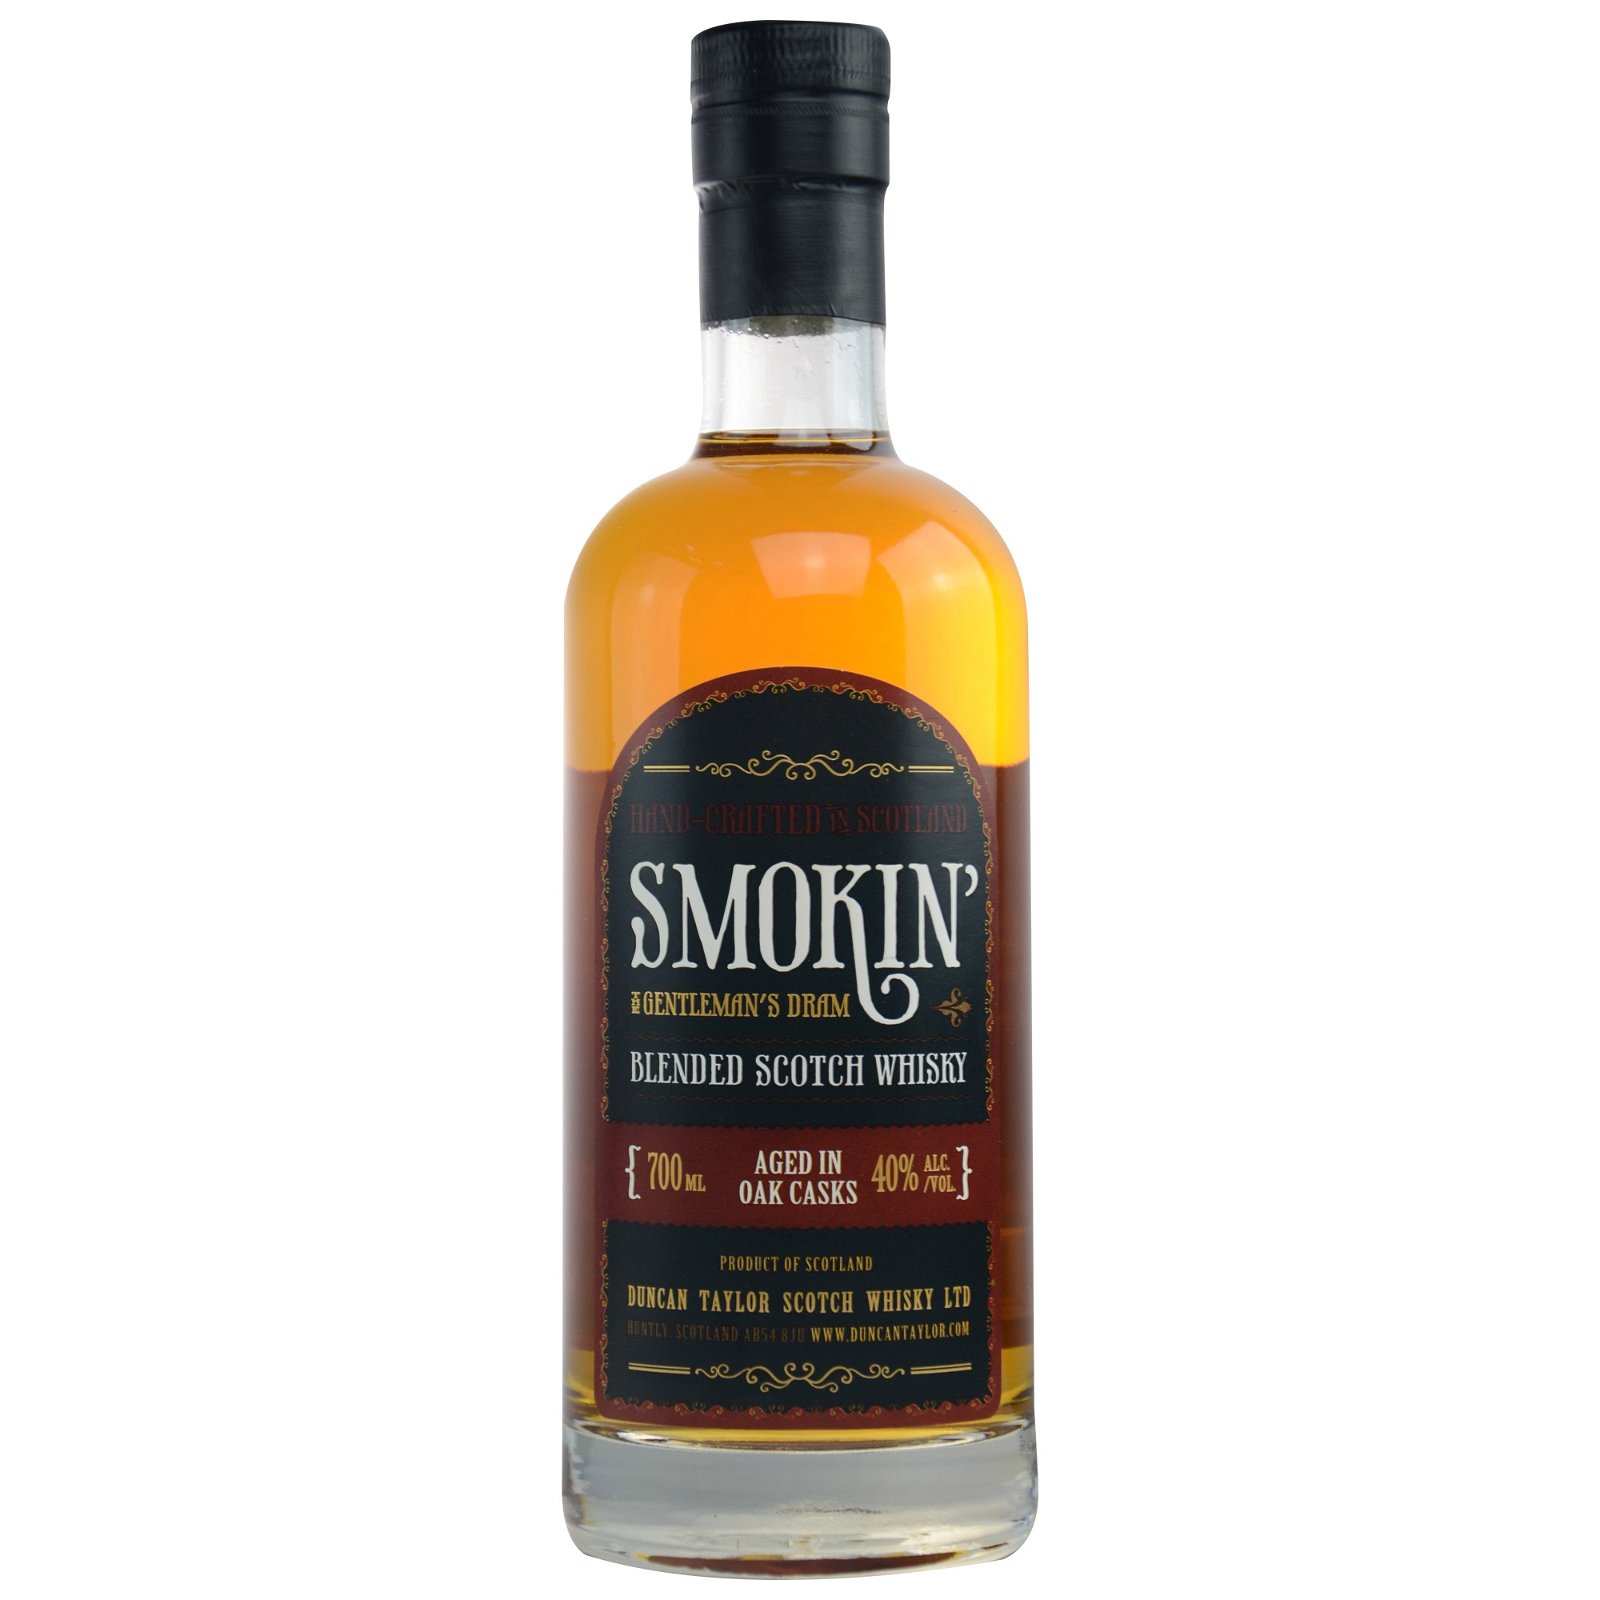 Smokin' The Gentleman's Dram Blended Scotch Whisky